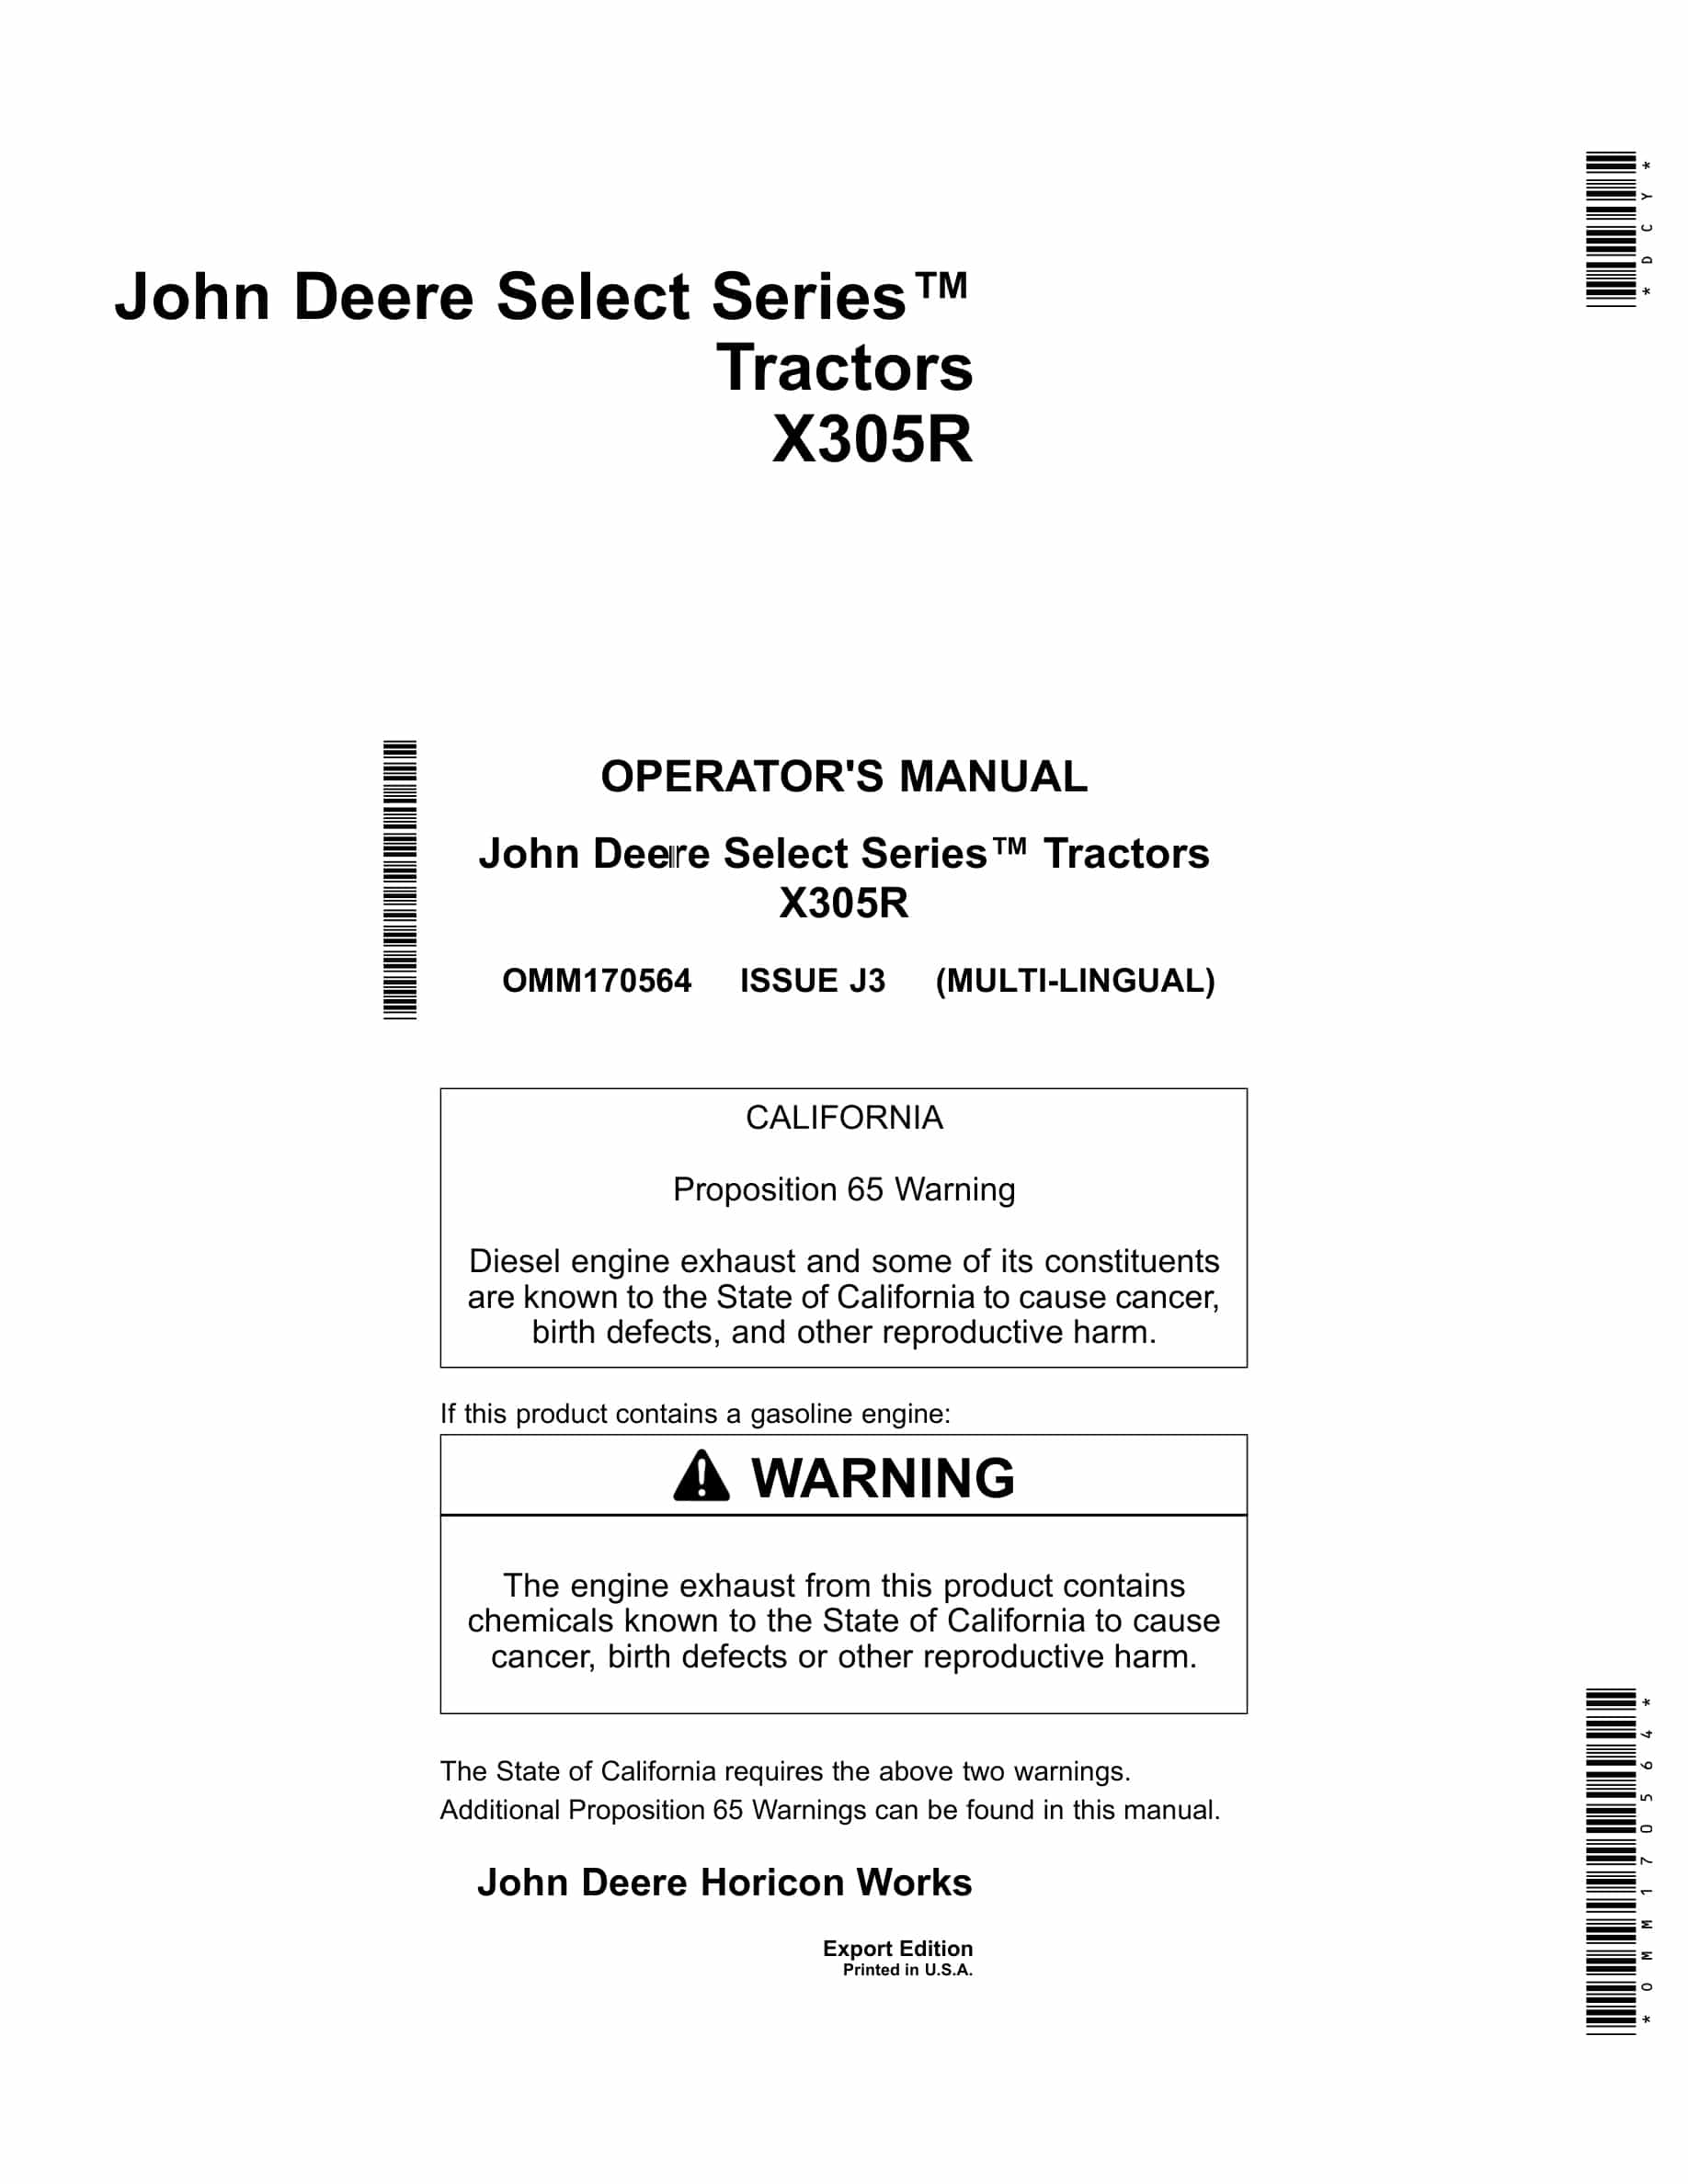 John Deere X305r Tractors Operator Manuals OMM170564-1